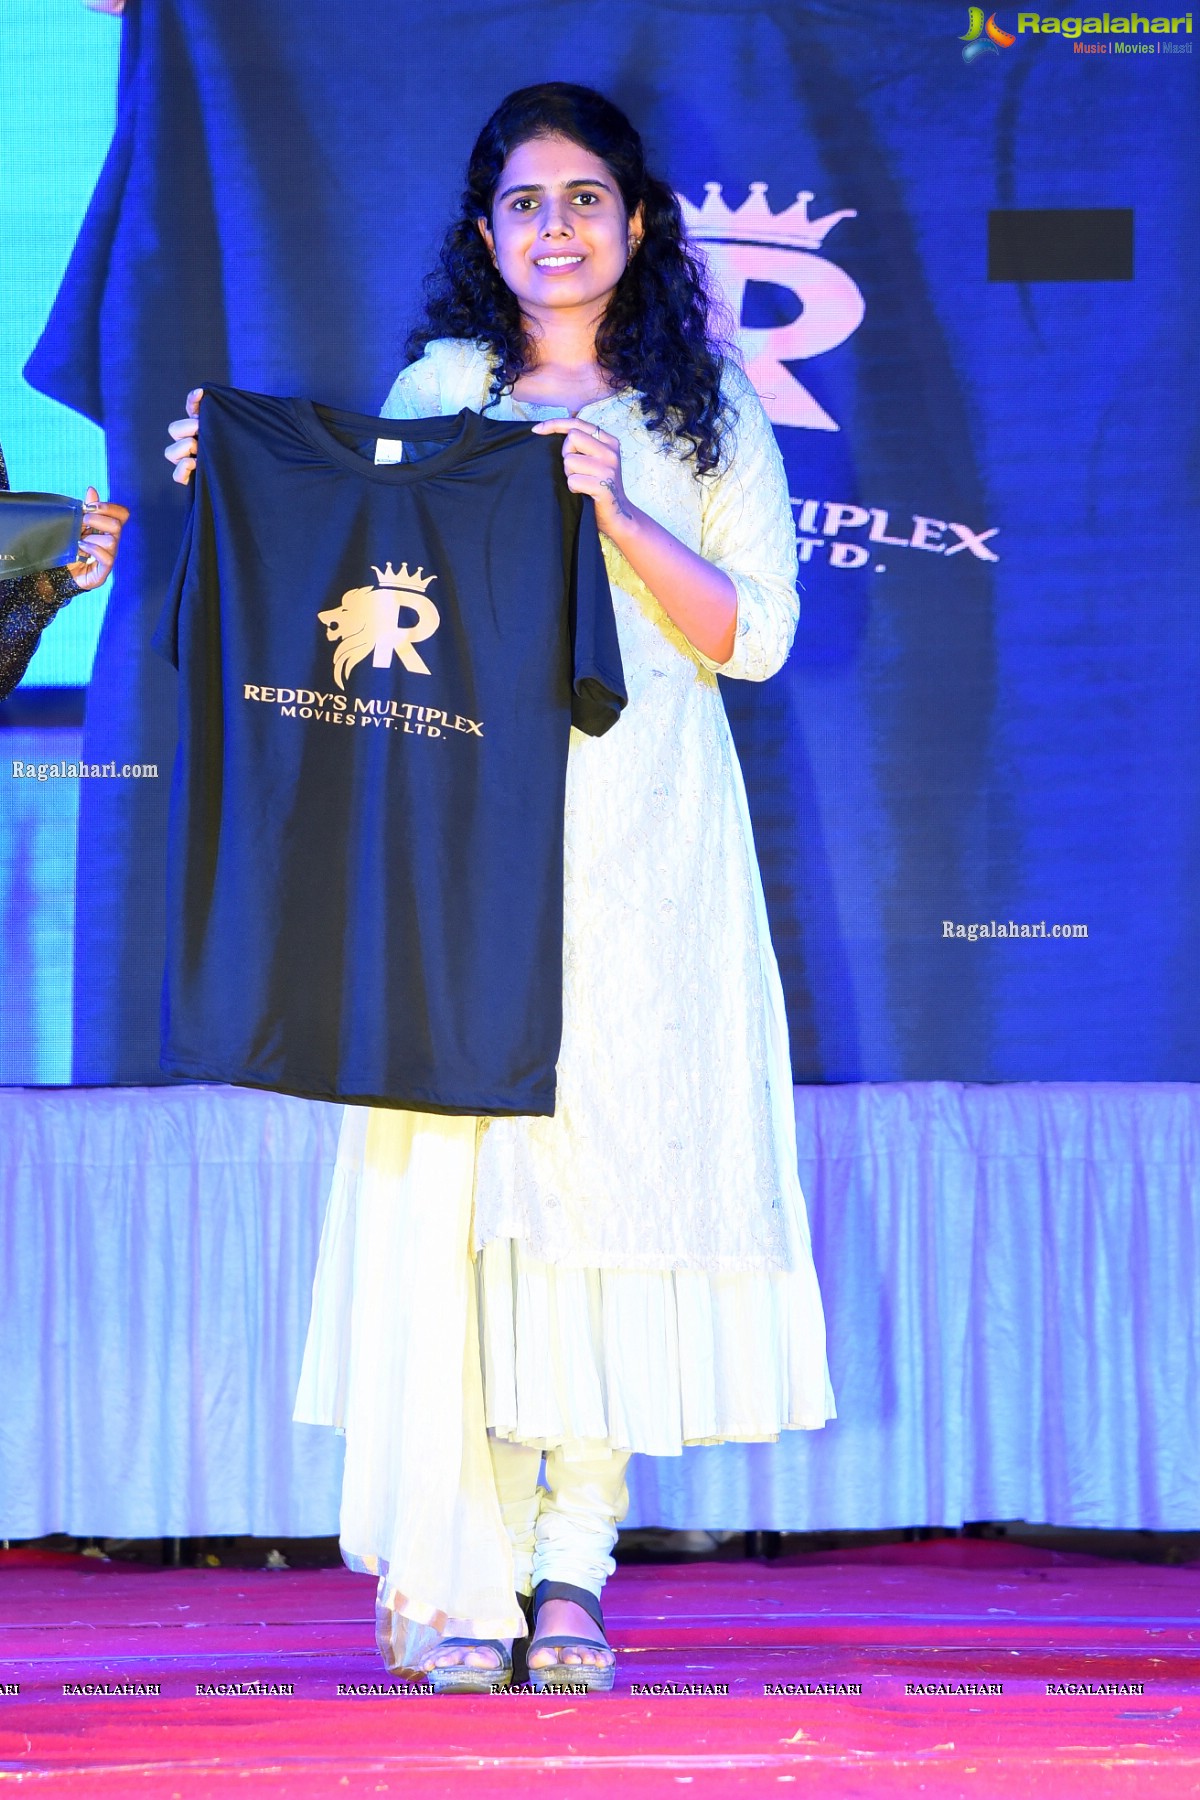 Reddy's Multiplex Movies Pvt. Ltd. Banner Launch